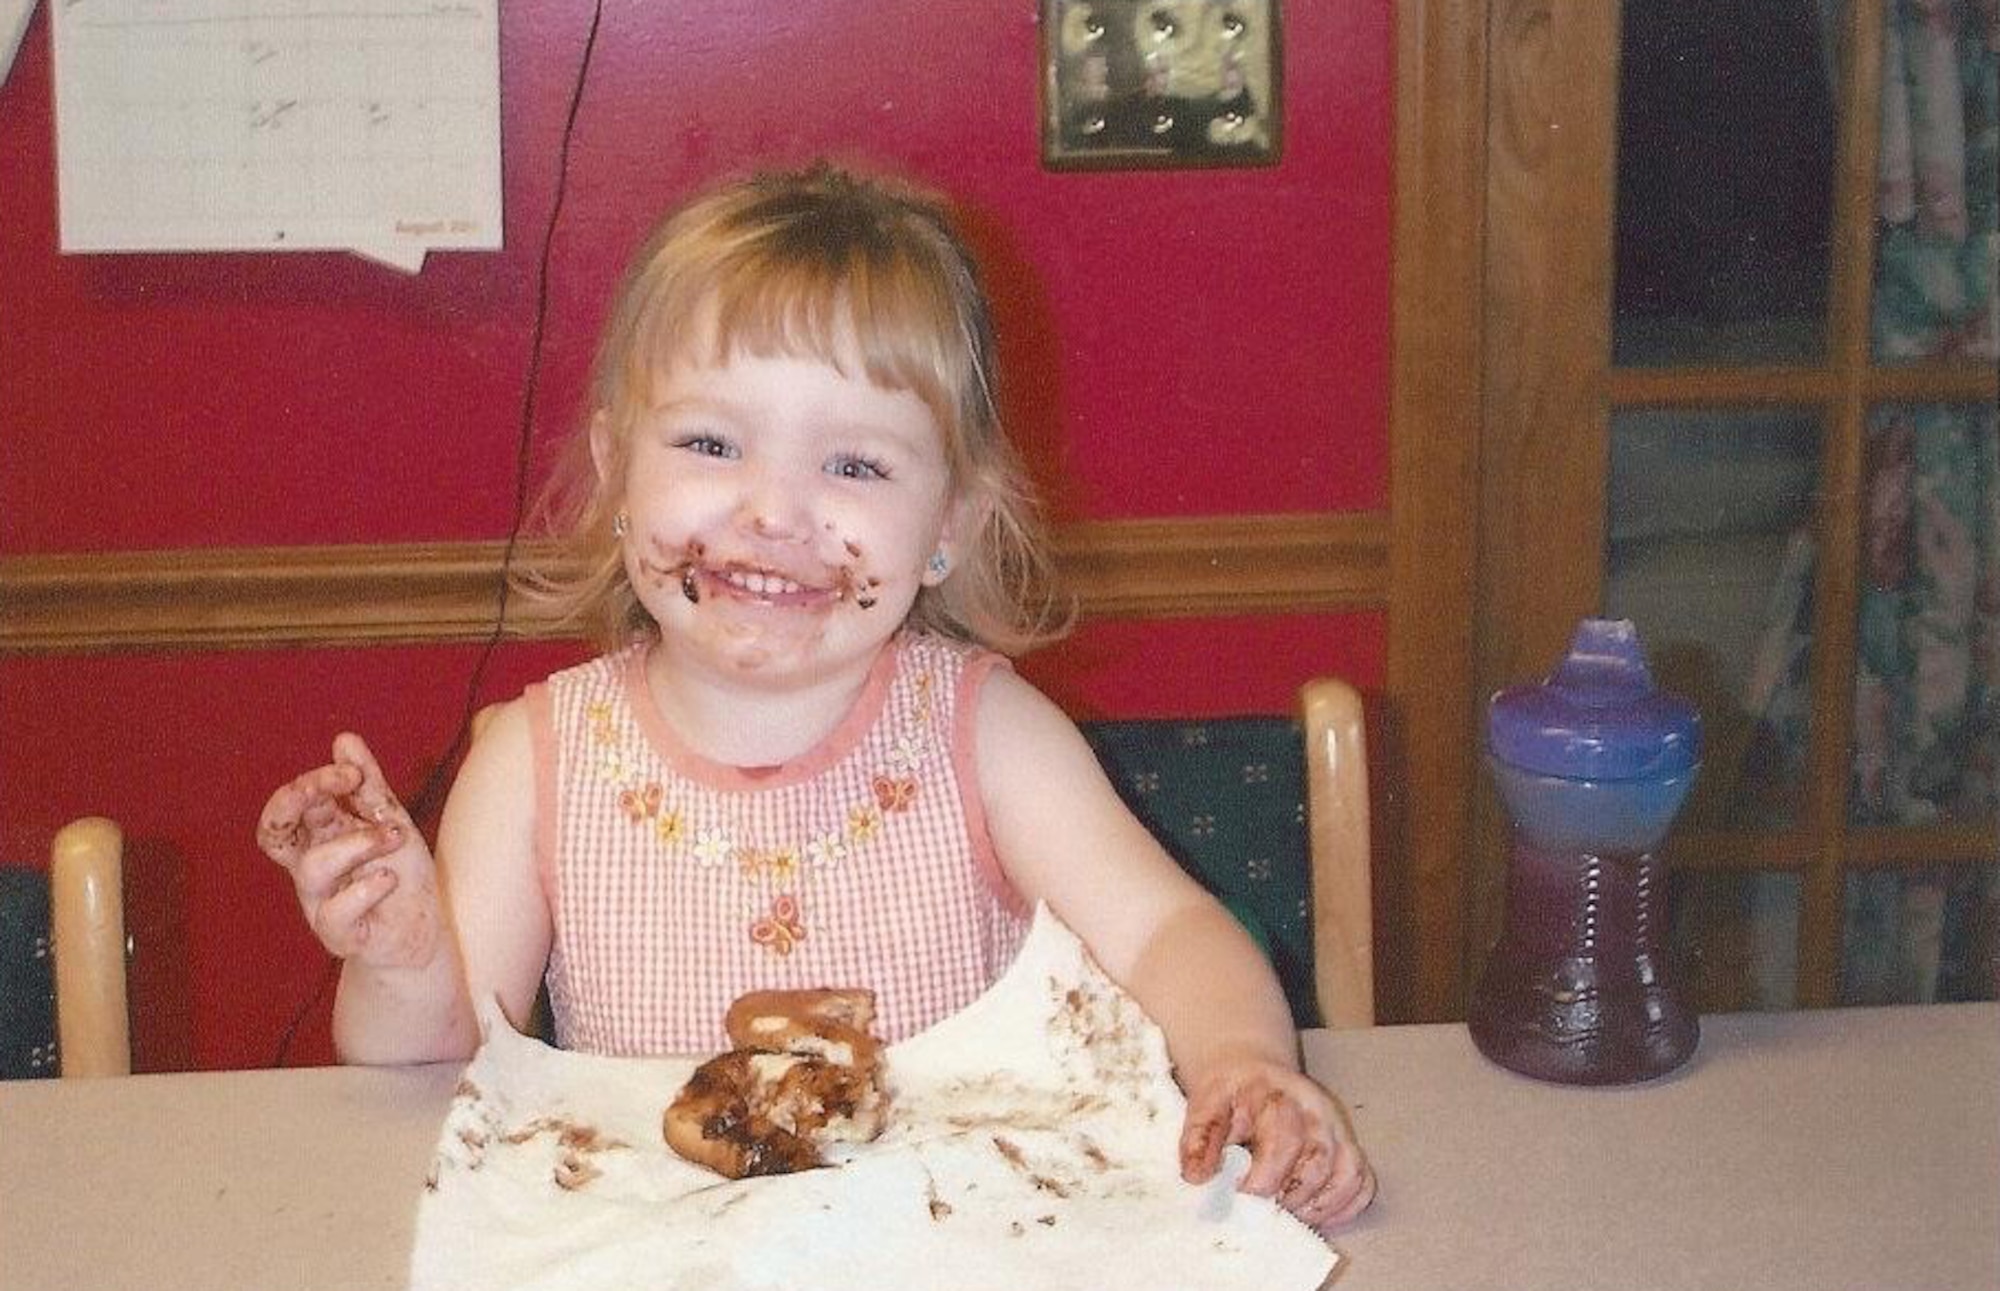 A small girl eats chocolate cake and smiles.